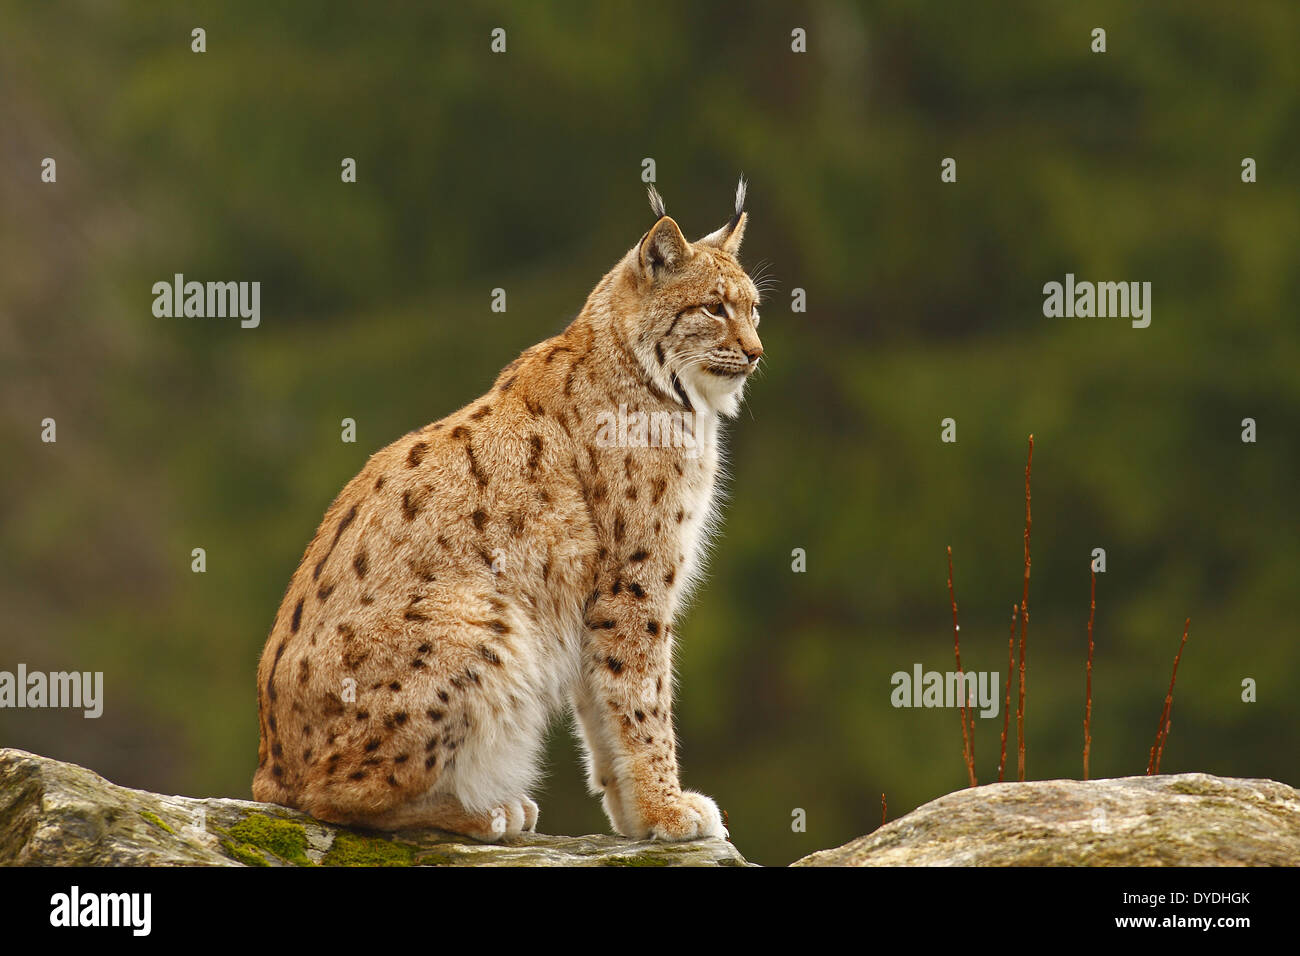 Unione, fauna, Feloidea, catlike, vertebrati terrestri, lynx, lince, Lynx lynx, Mammalia, natura, predator, mammifero Foto Stock